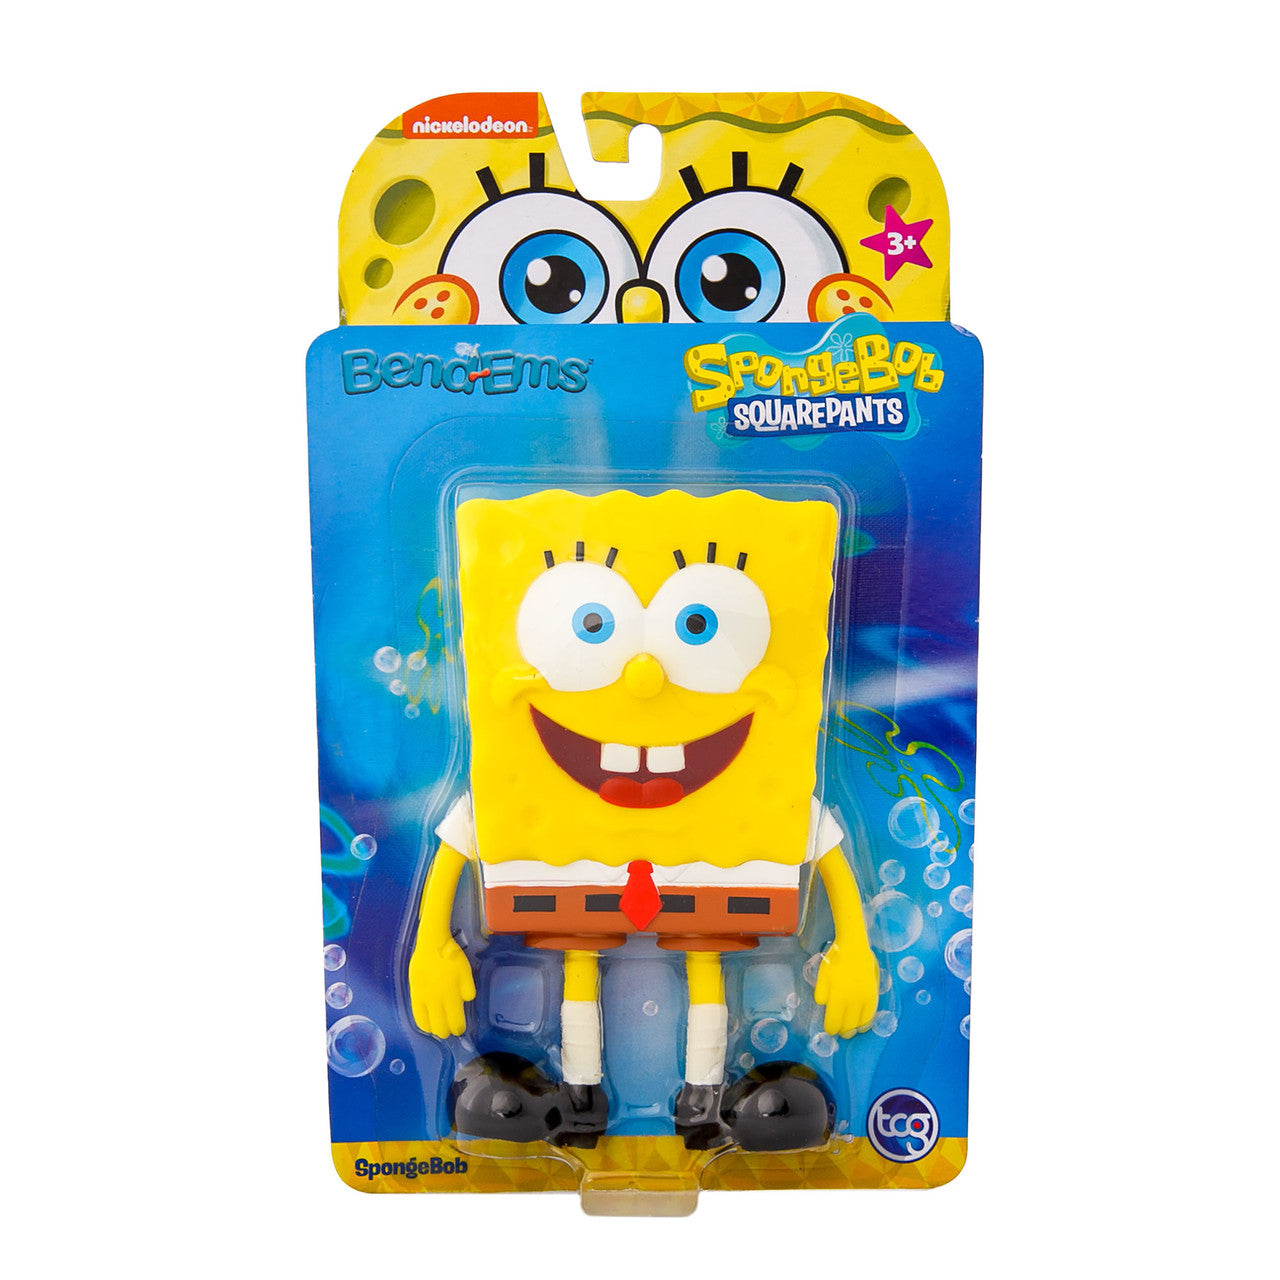 NJ Croce-Bend-Ems Spongebob-55025-Legacy Toys